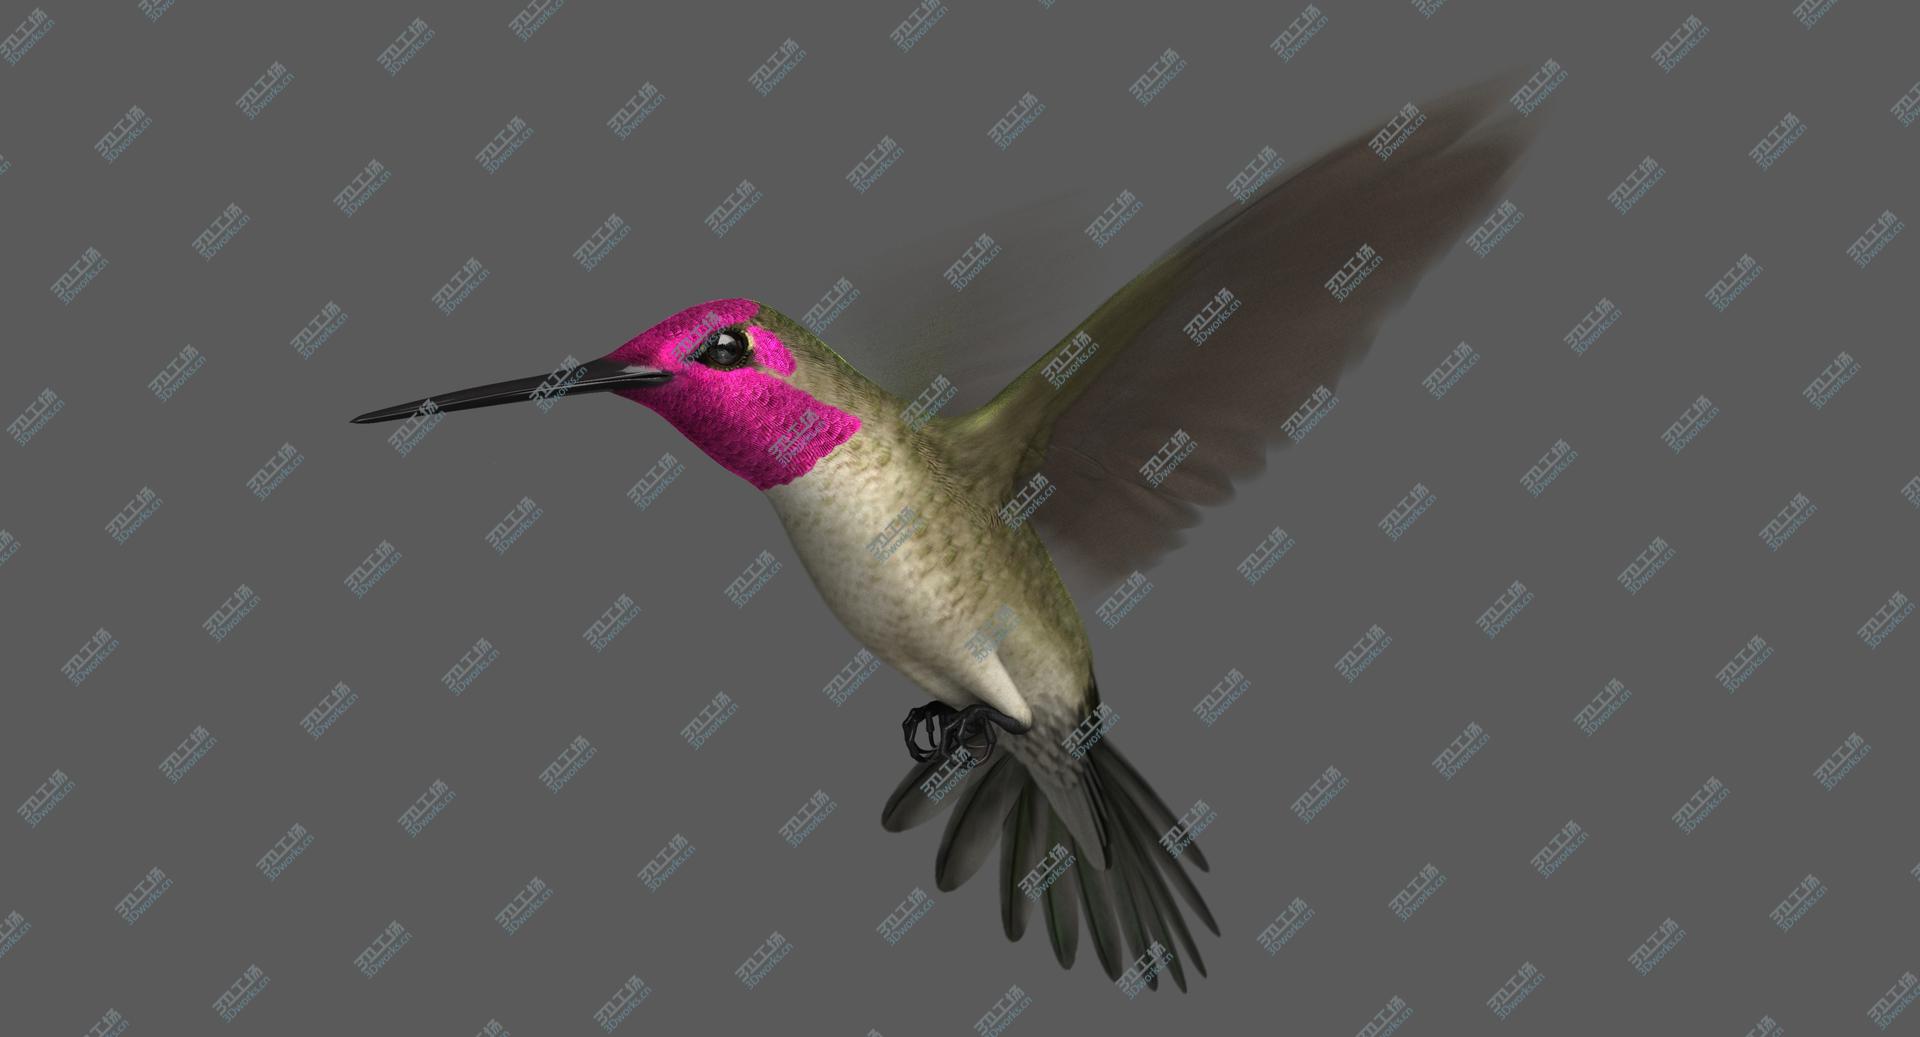 images/goods_img/202105071/3D Anna's Hummingbird (Animated) model/4.jpg